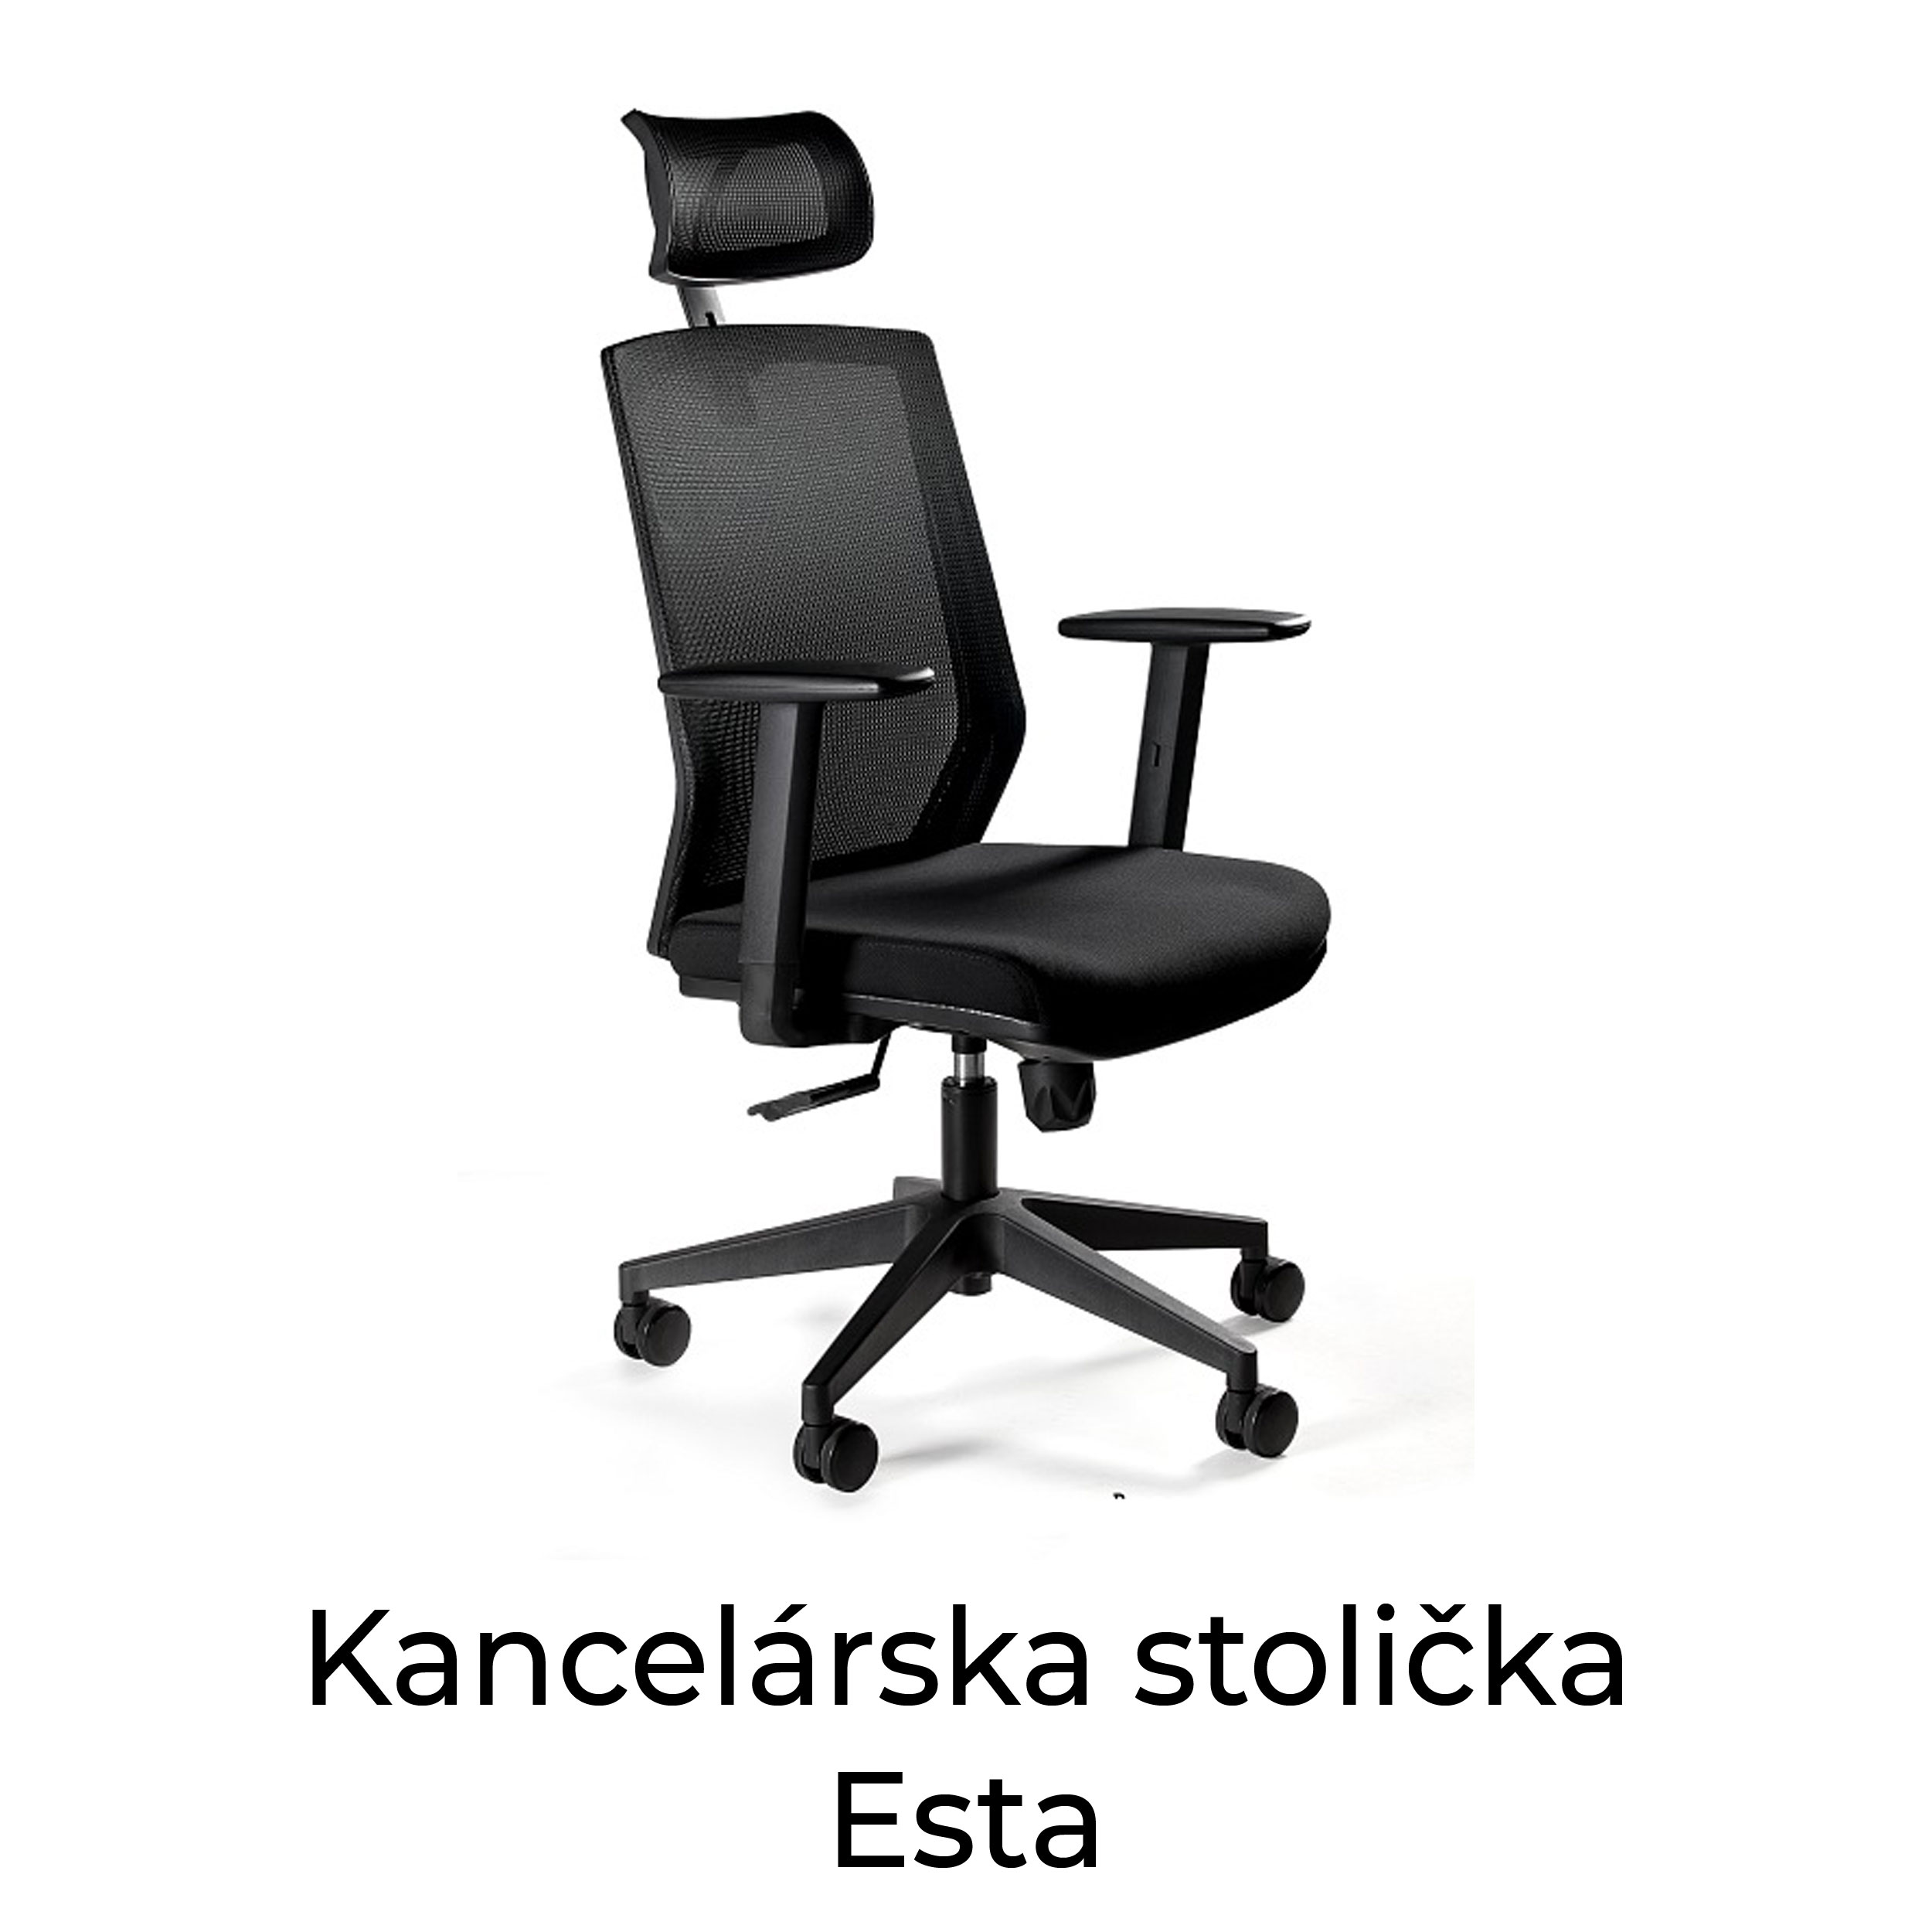 Moderná a pohodlná kancelárska stolička do vašej pracovne či kancelárie